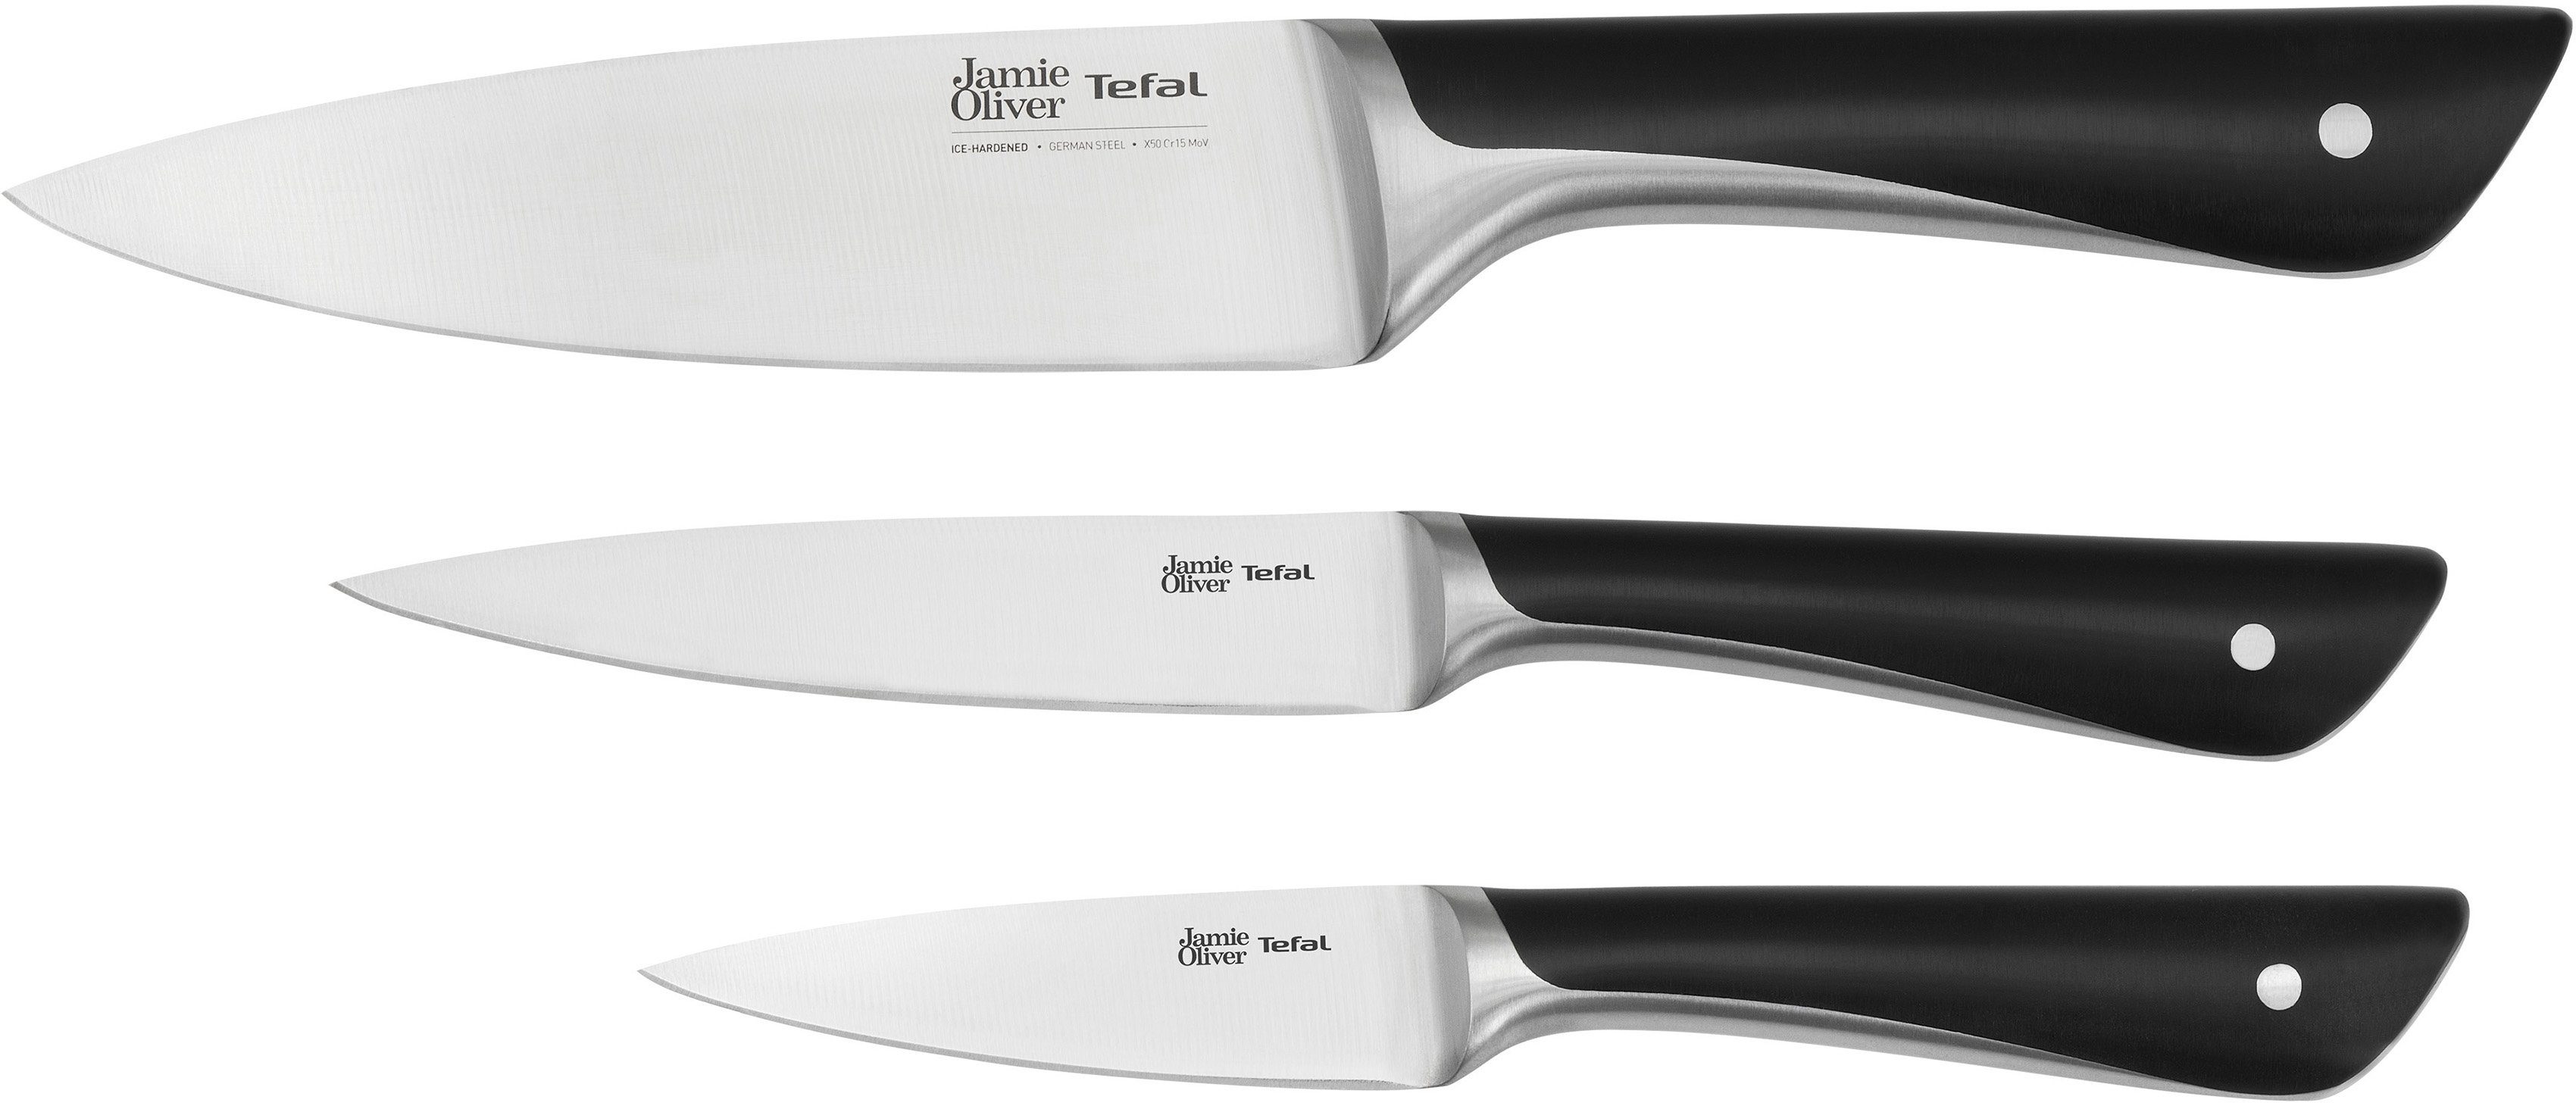 Tefal Messer-Set K267S3 Jamie Oliver (Set, 3-tlg), hohe Leistung, unverwechselbares Design, widerstandsfähig/langlebig | Messersets